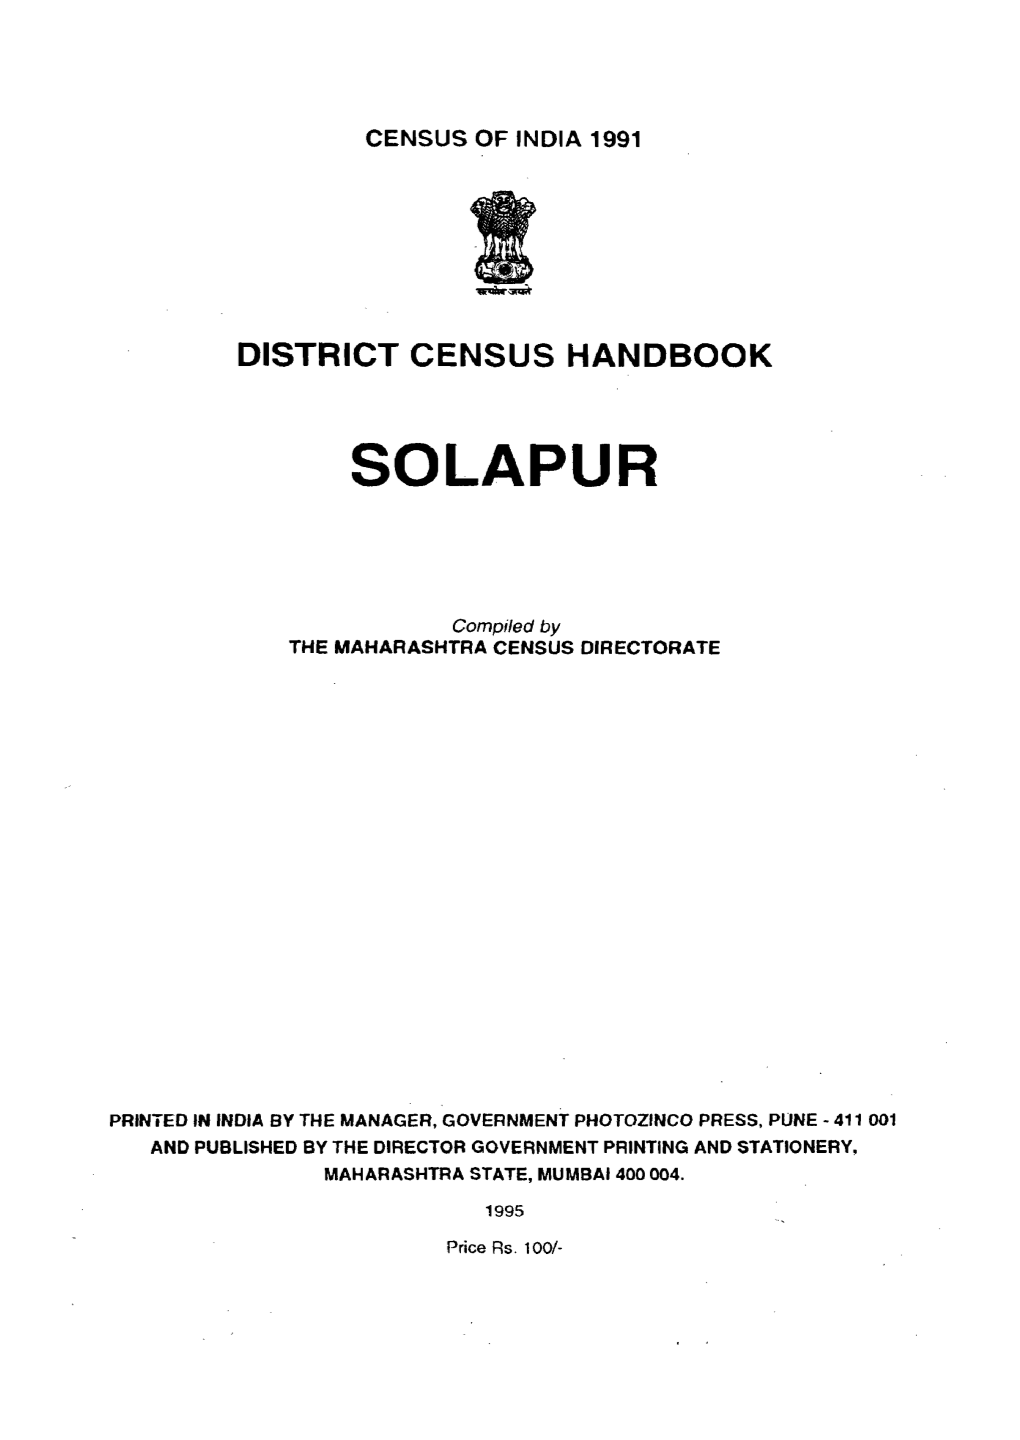 District Census Handbook, Solapur, Part XII-A & B, Series-14